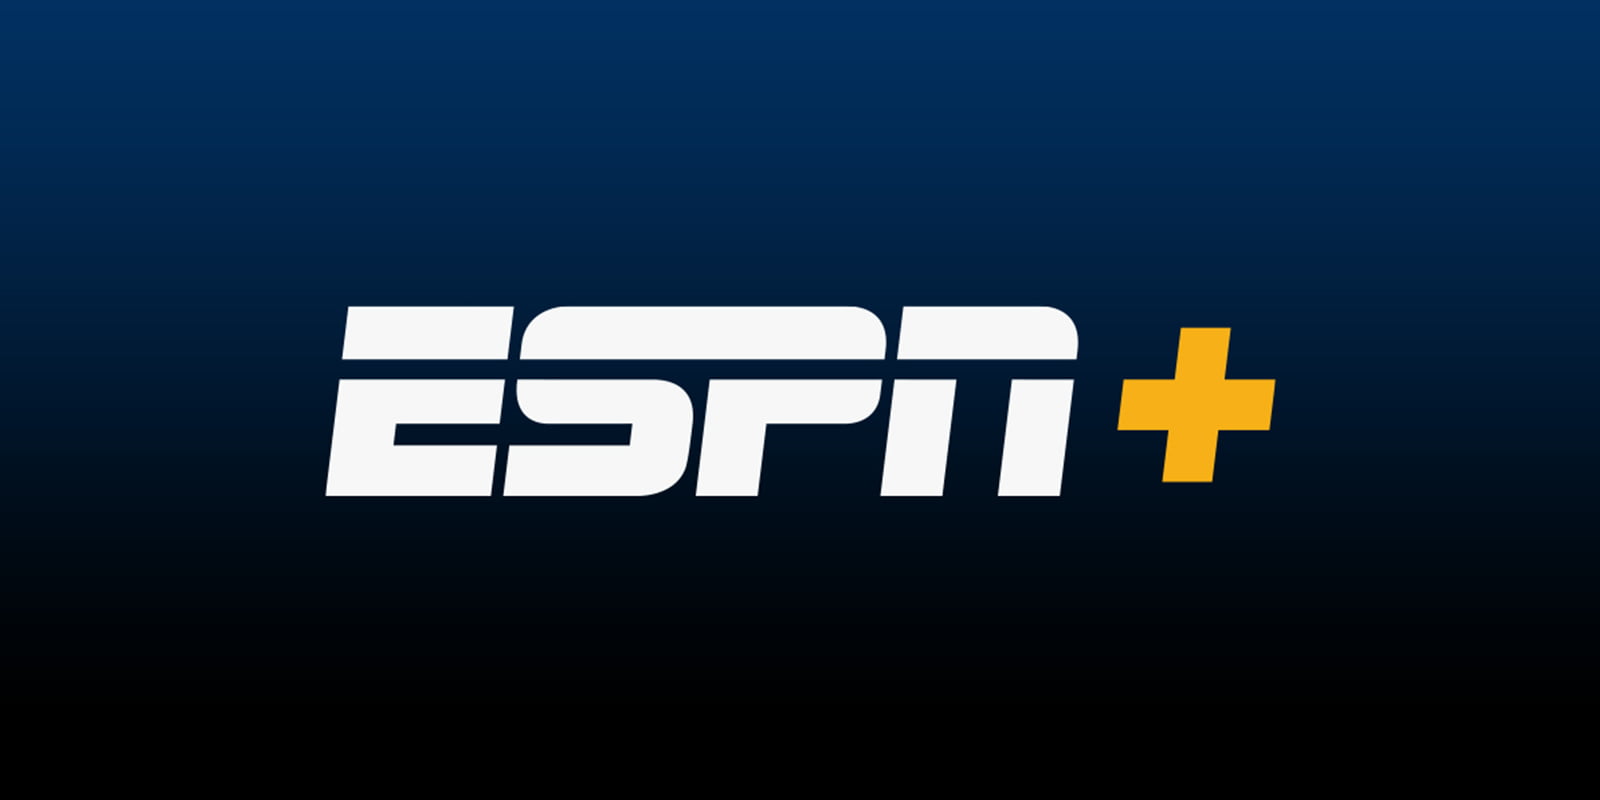 A logo of ESPN Plus